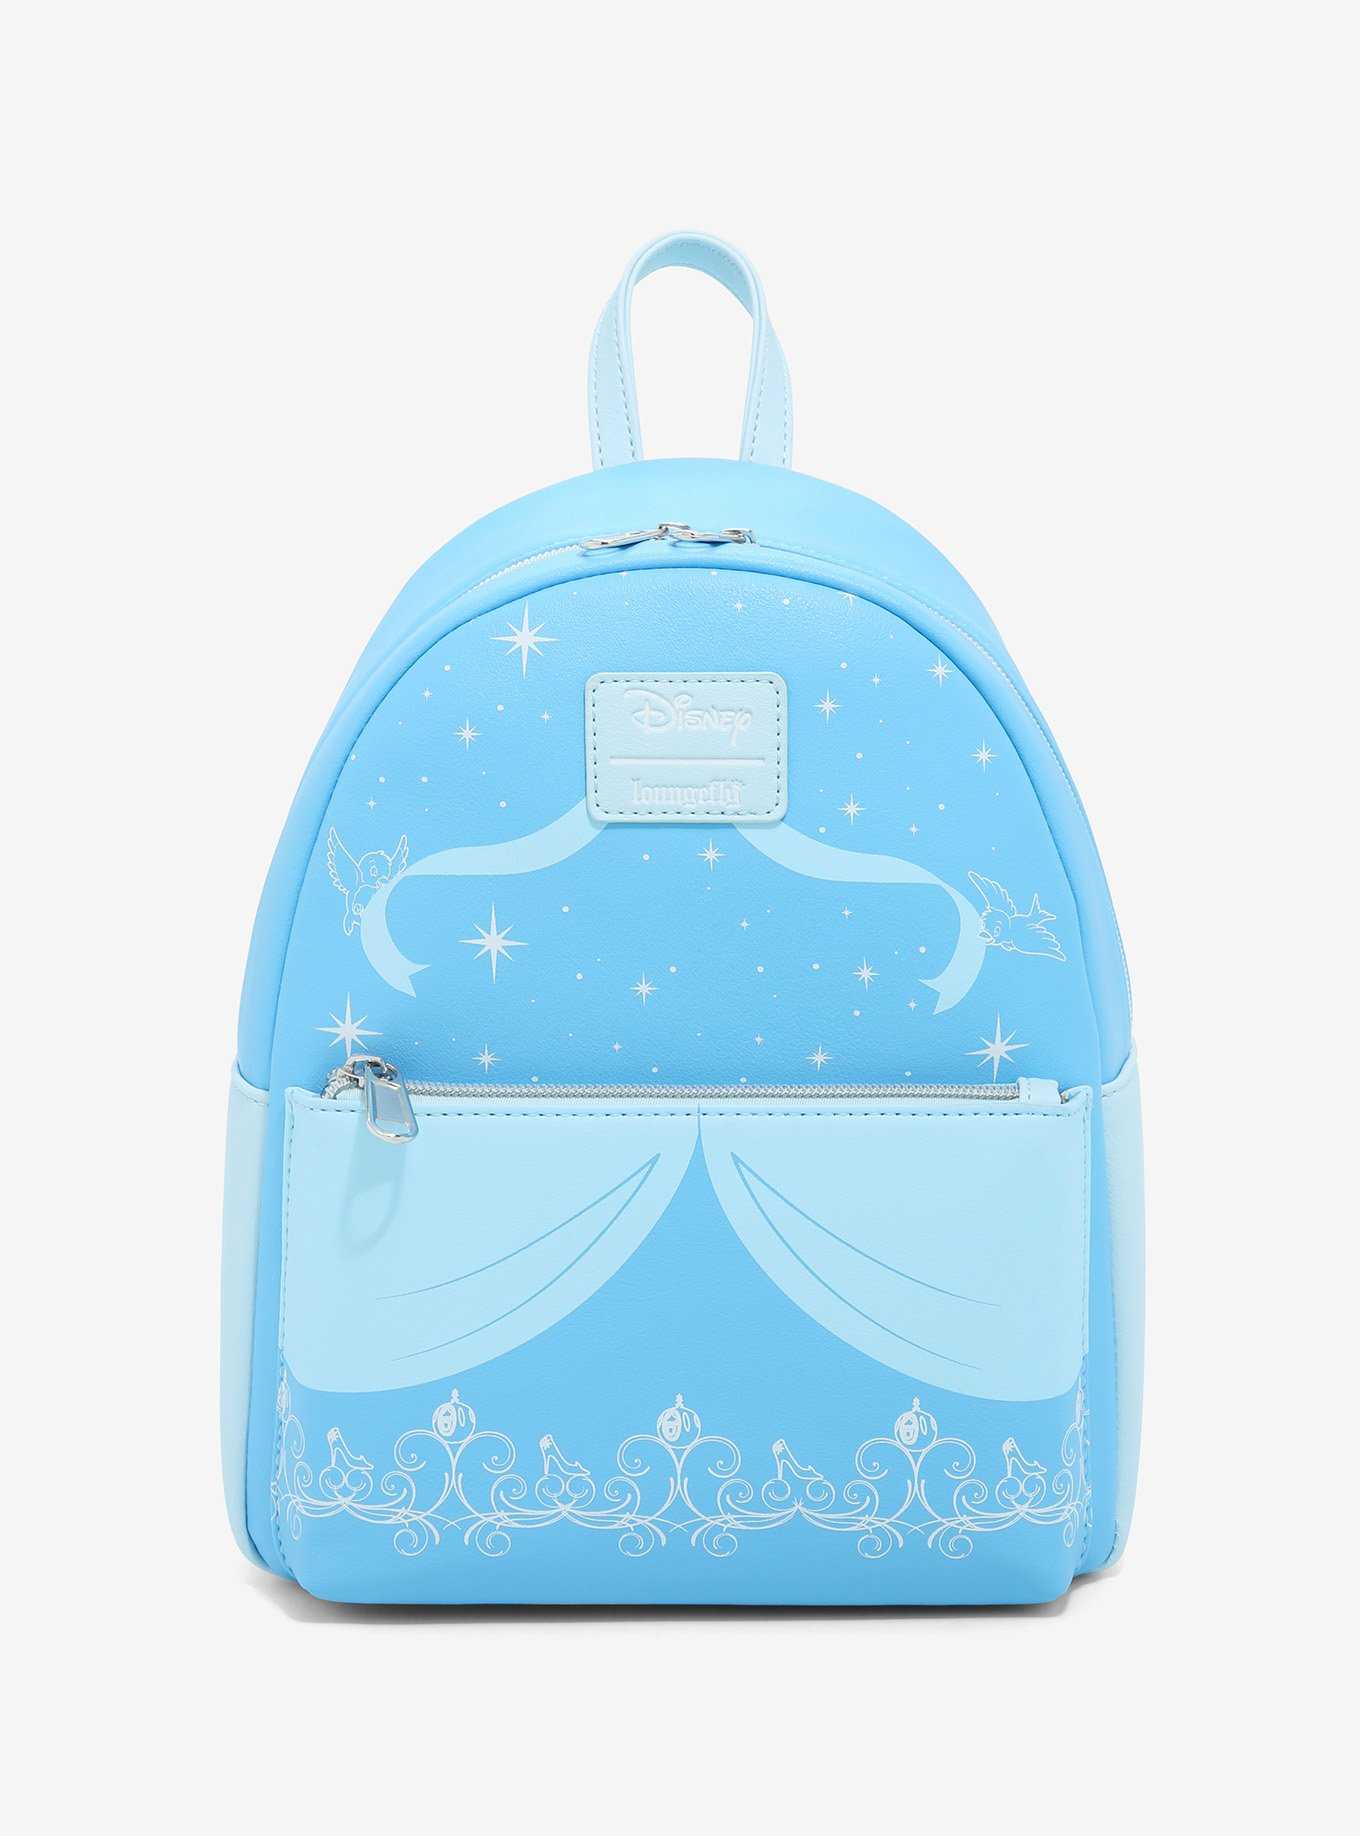 Loungefly Disney Cinderella Dress Filigree Mini Backpack, , hi-res